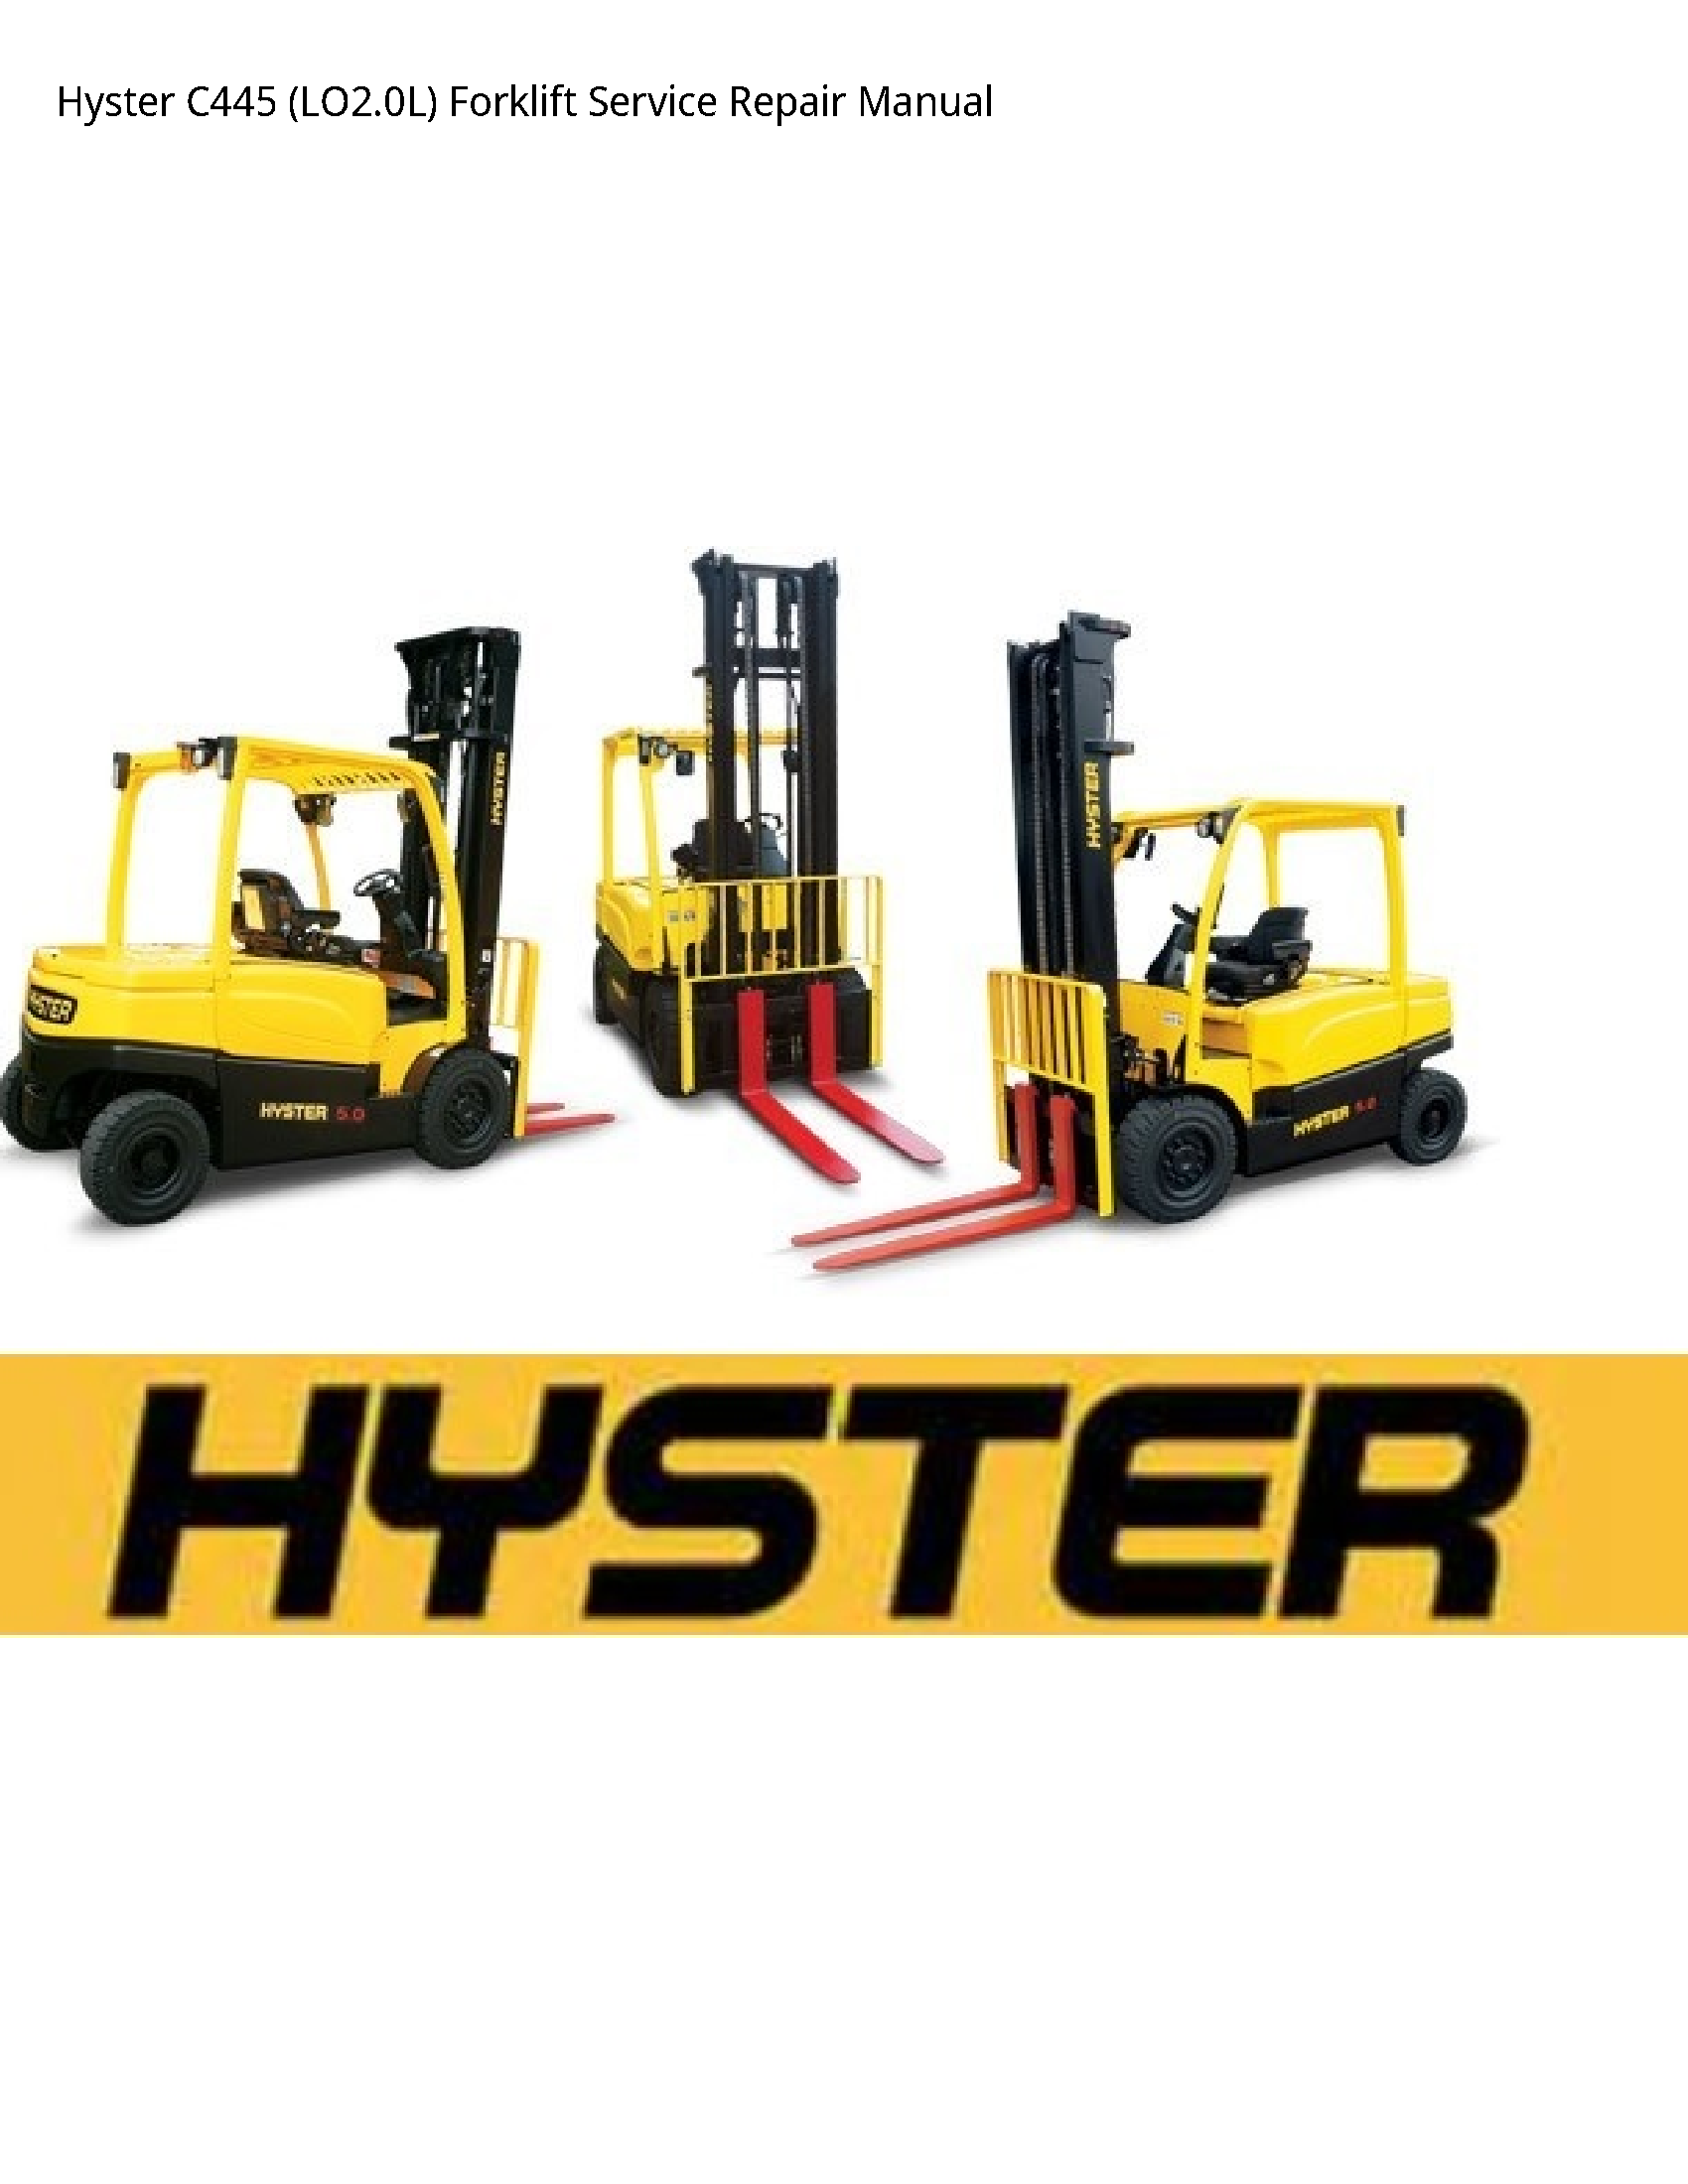 Hyster C445 Forklift manual